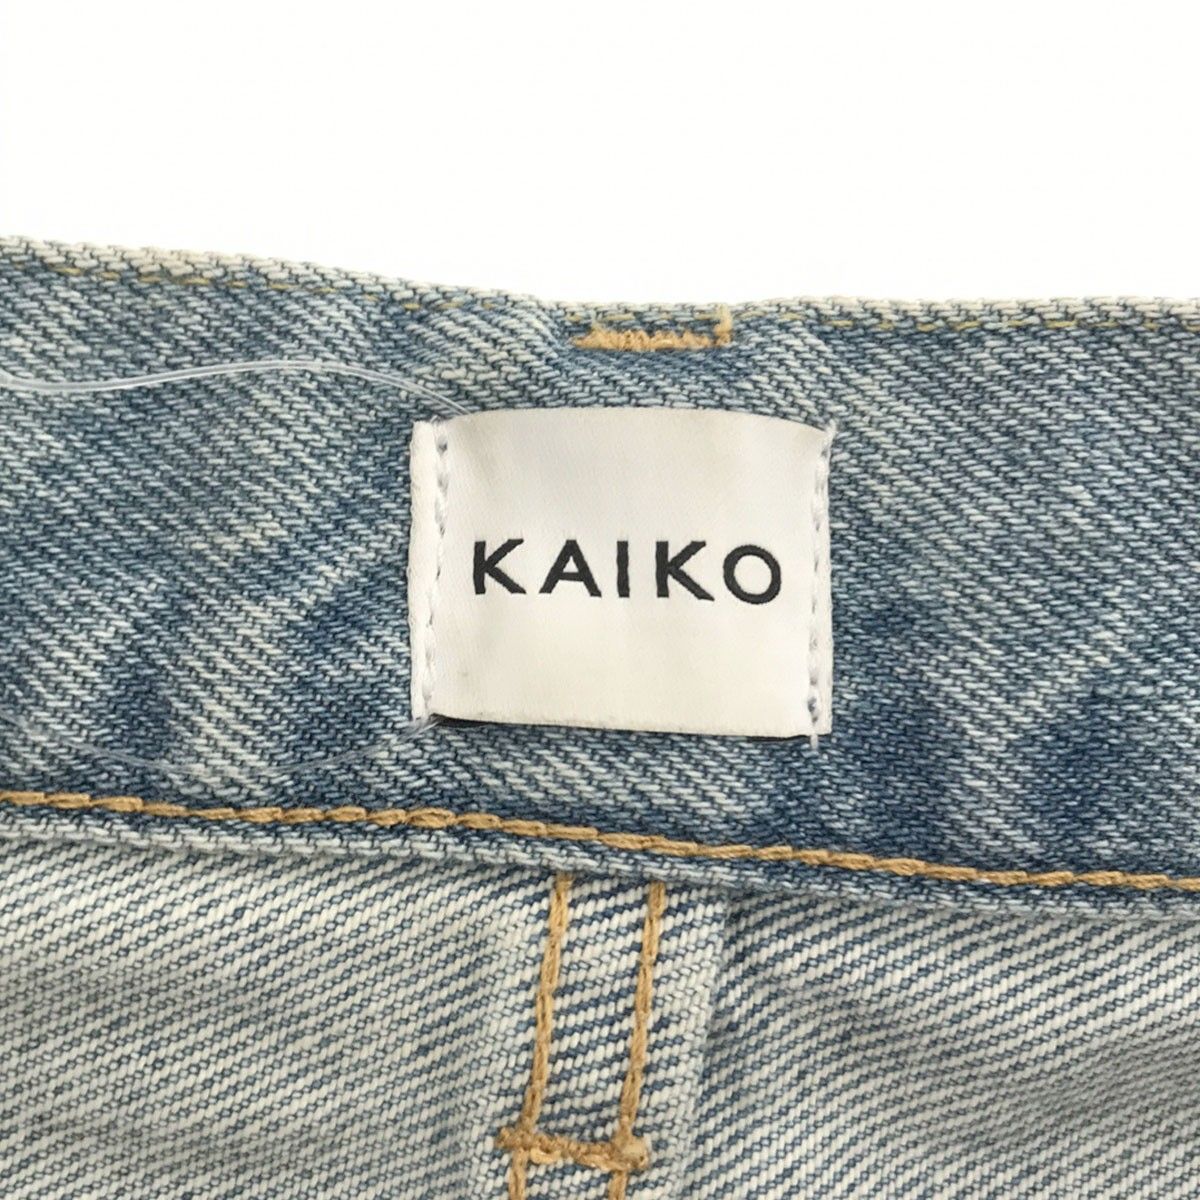 KAIKO カイコ 19SS BUG DENIM PANT FULLWASH サイドスリットバグデニムパンツ インディゴ 1 KAIKO-19-009